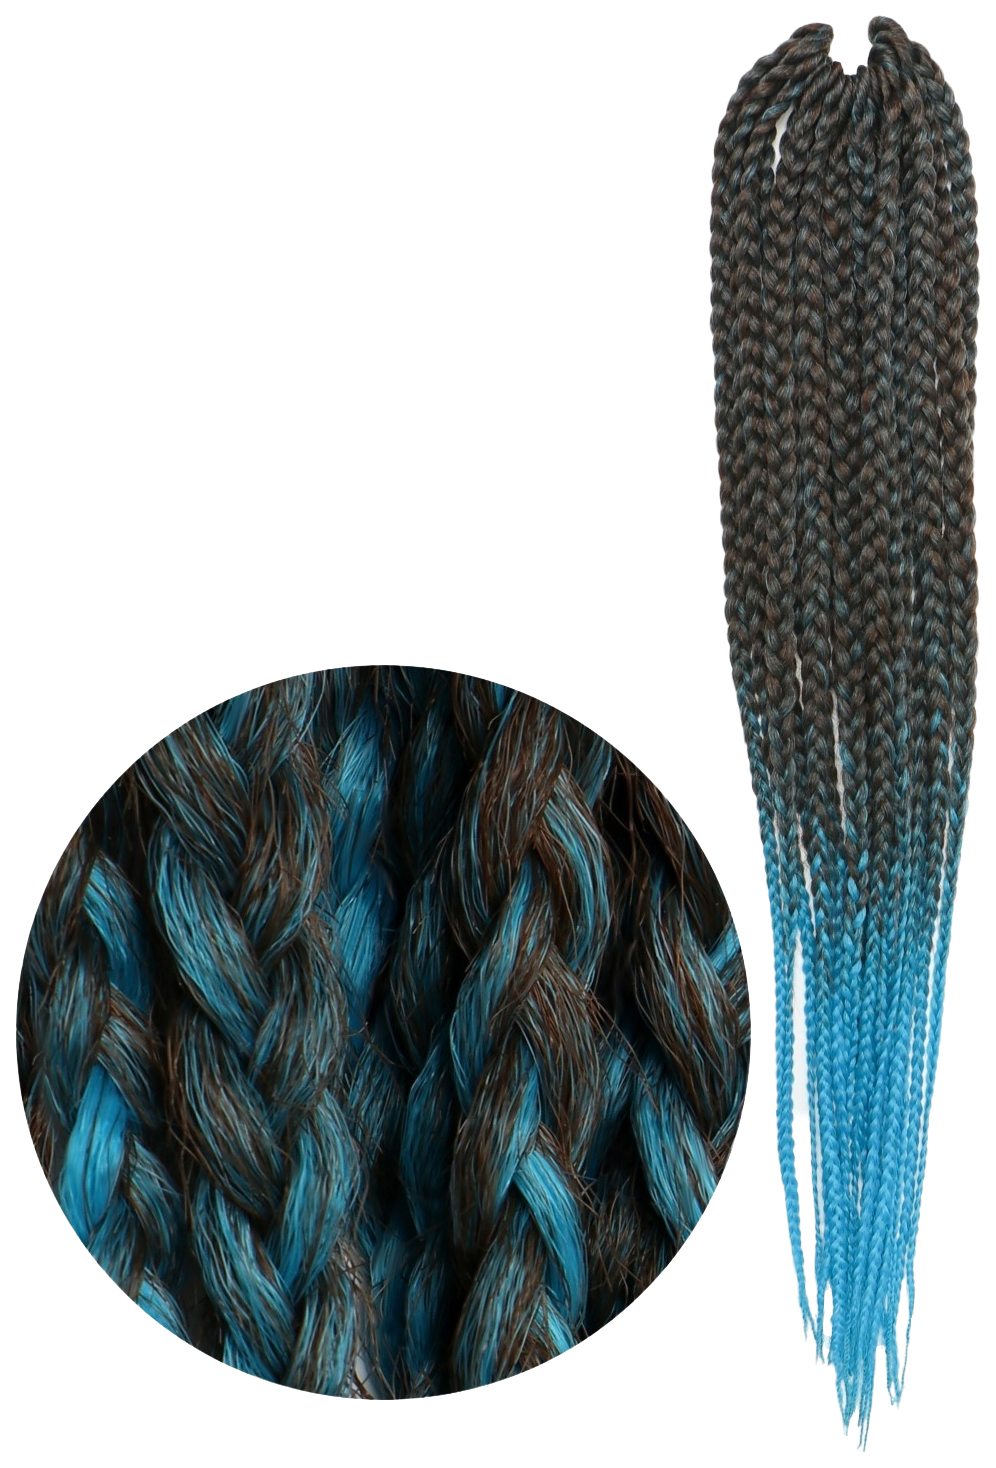 Афрокосы Queen Fair Sim-Braids CE 18 прядей 60 см цвет русый голубой FR-18 sim braids афрокосы 60 см 18 прядей ce ультрамарин bd